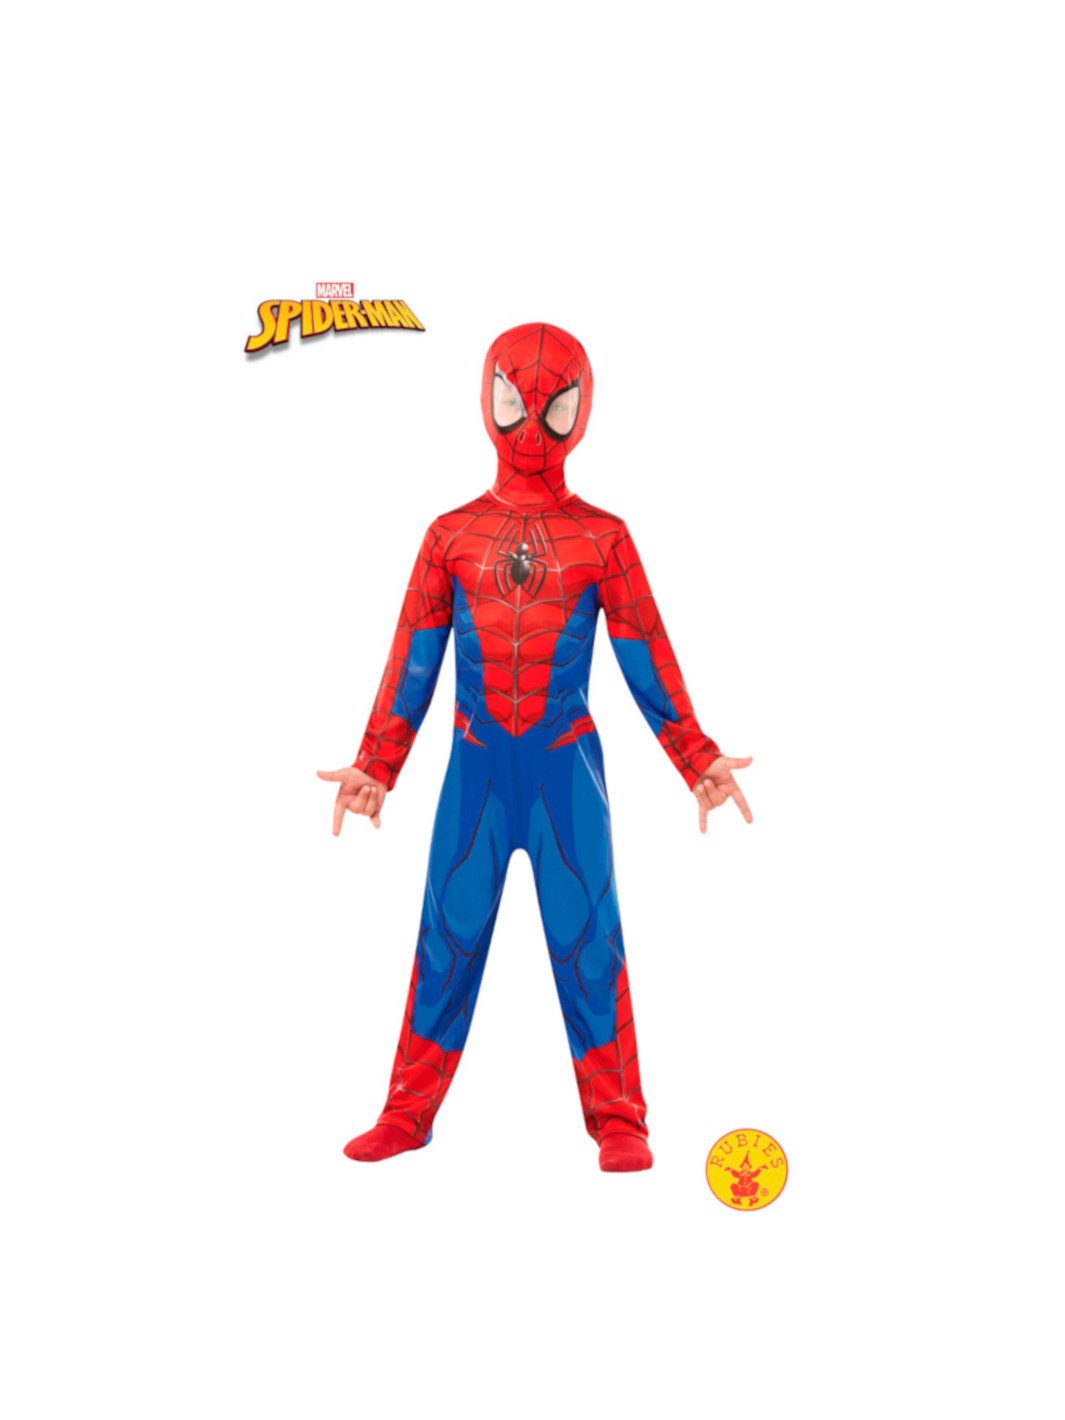 Costume spiderman classic marvel originale per bambini - Toys Center